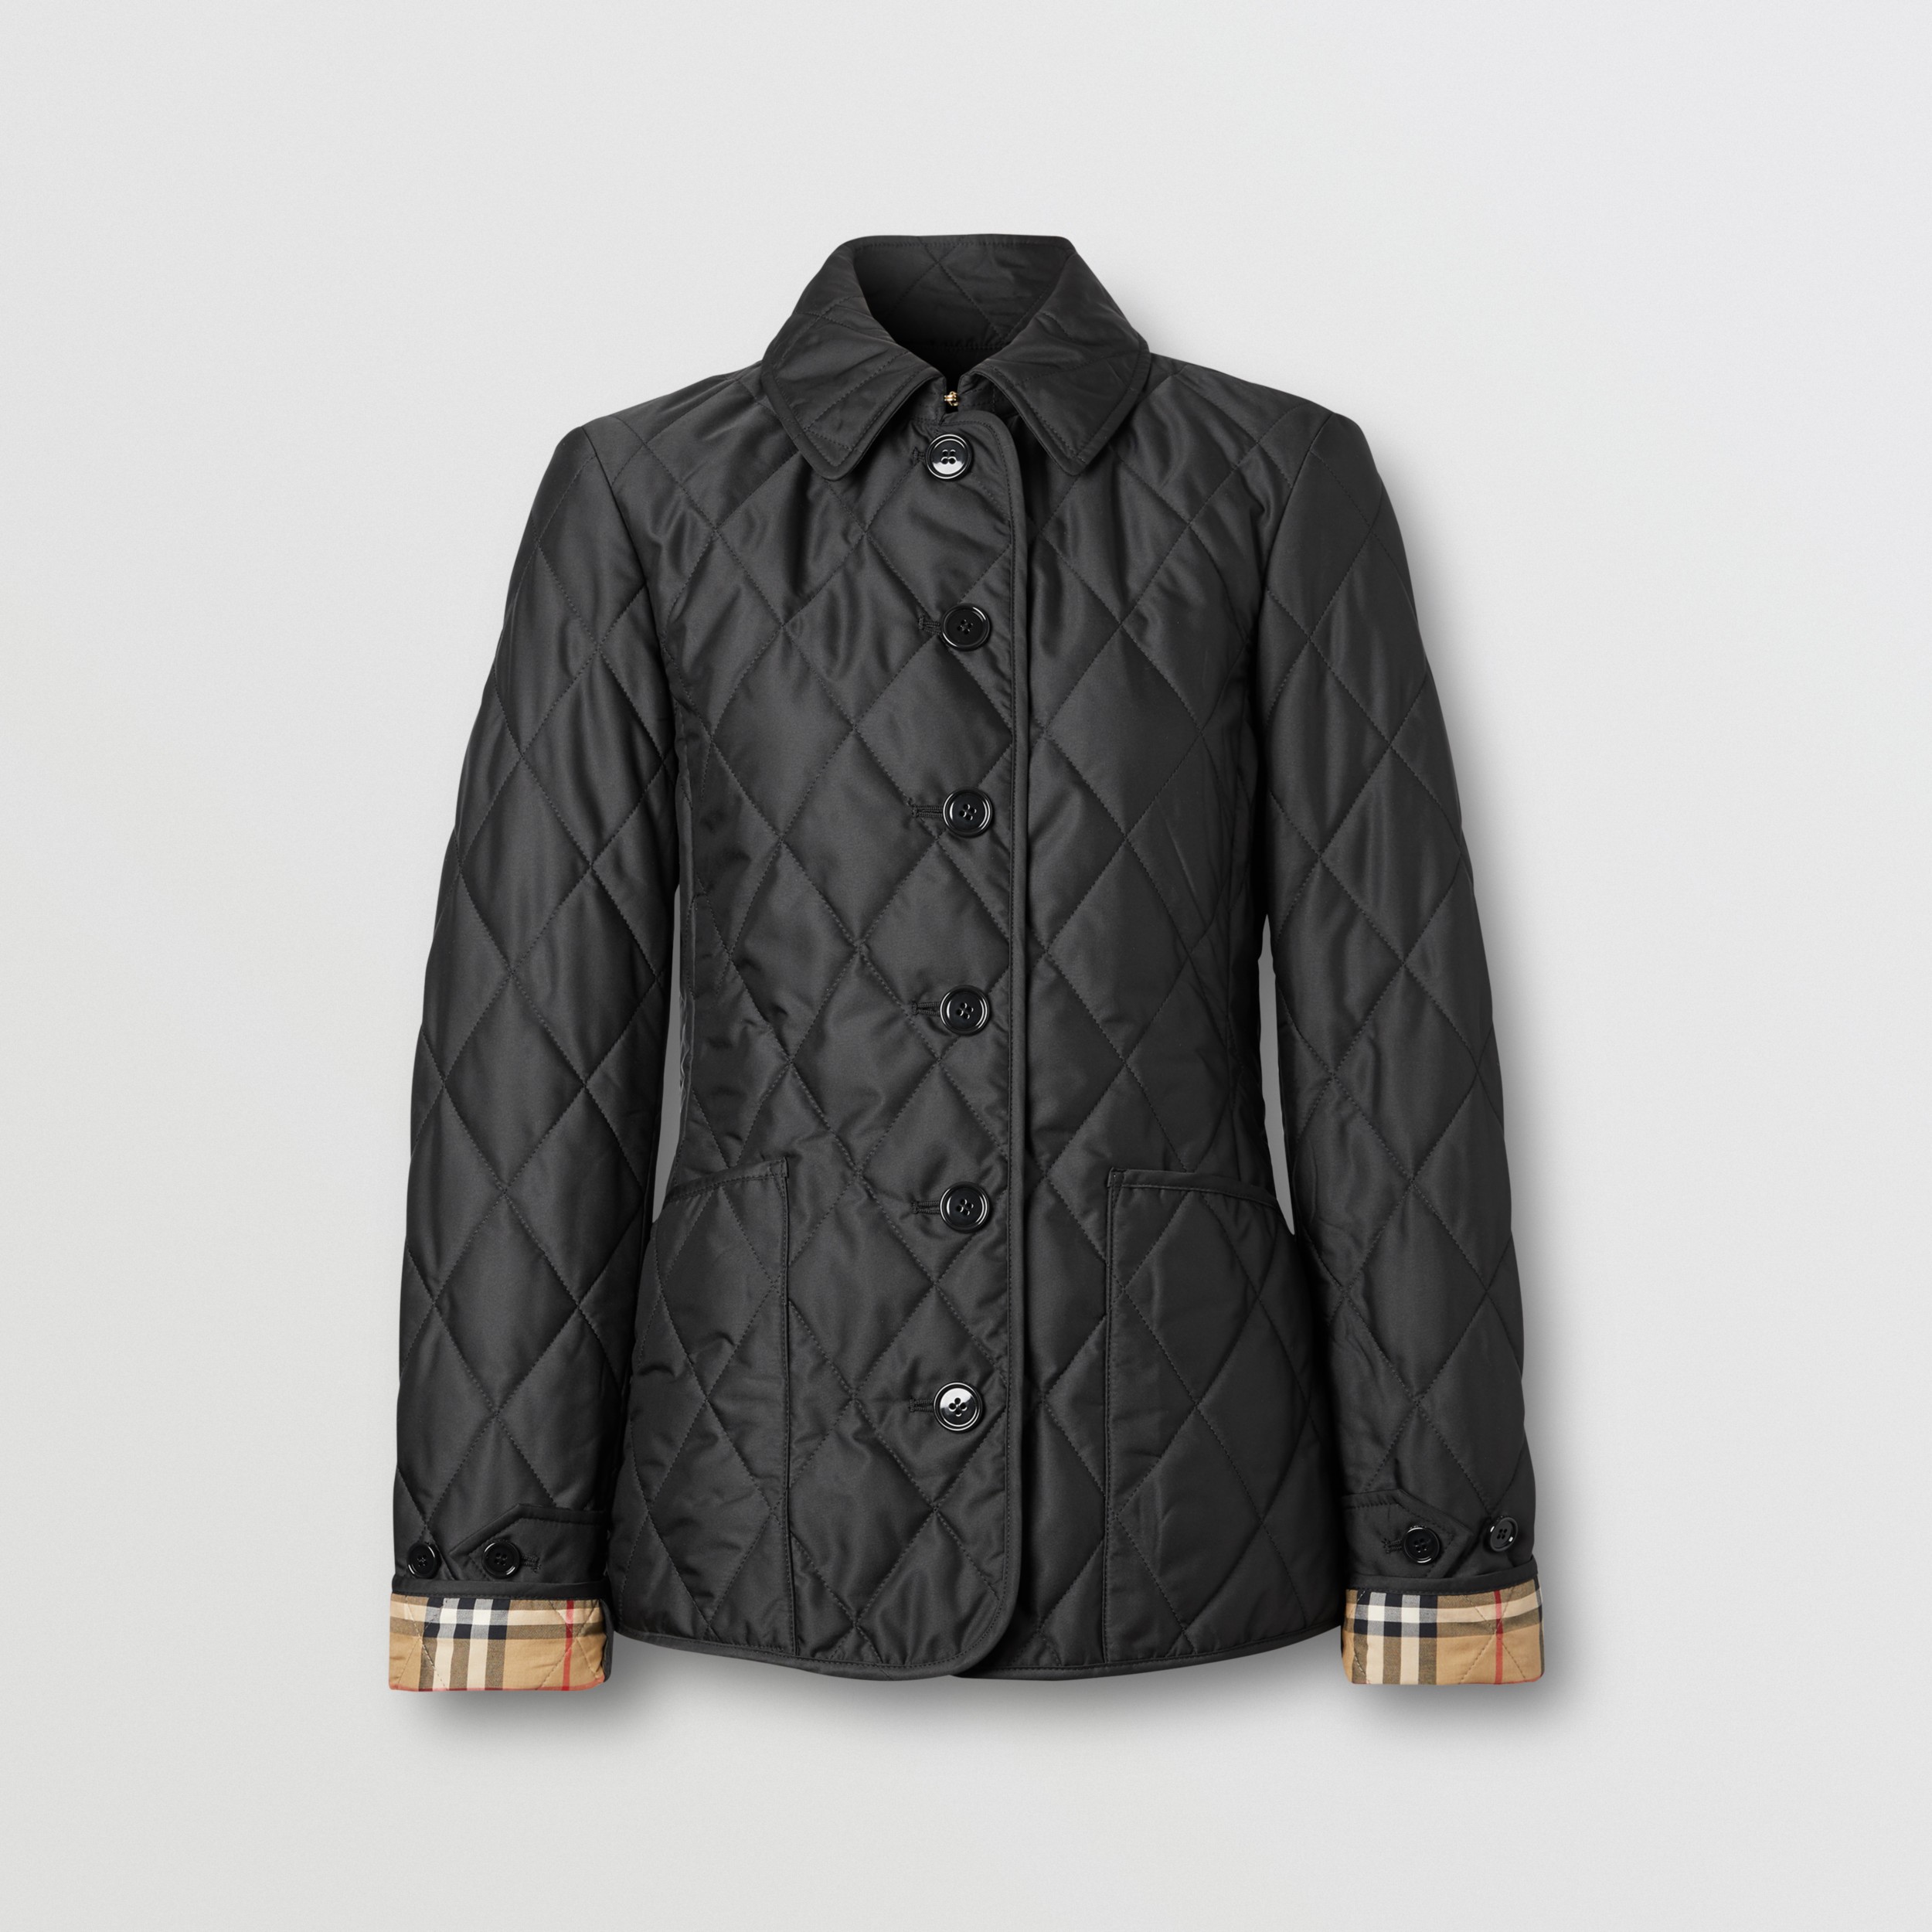 Arriba 64+ imagen burberry jacket on sale